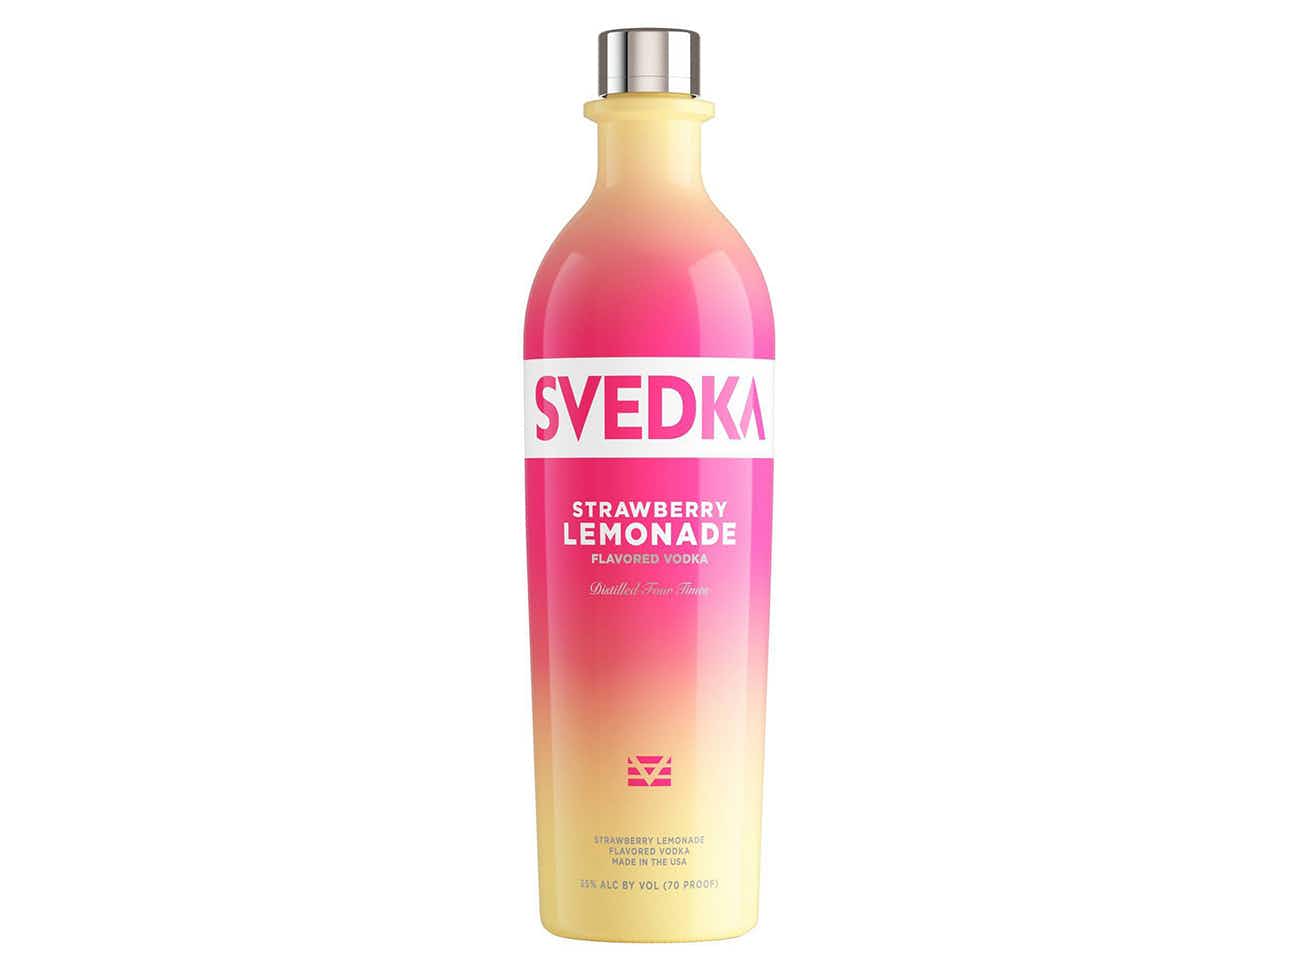 best cheap vodkas - svedka strawberry lemonade flavored 70 proof vodka bottle